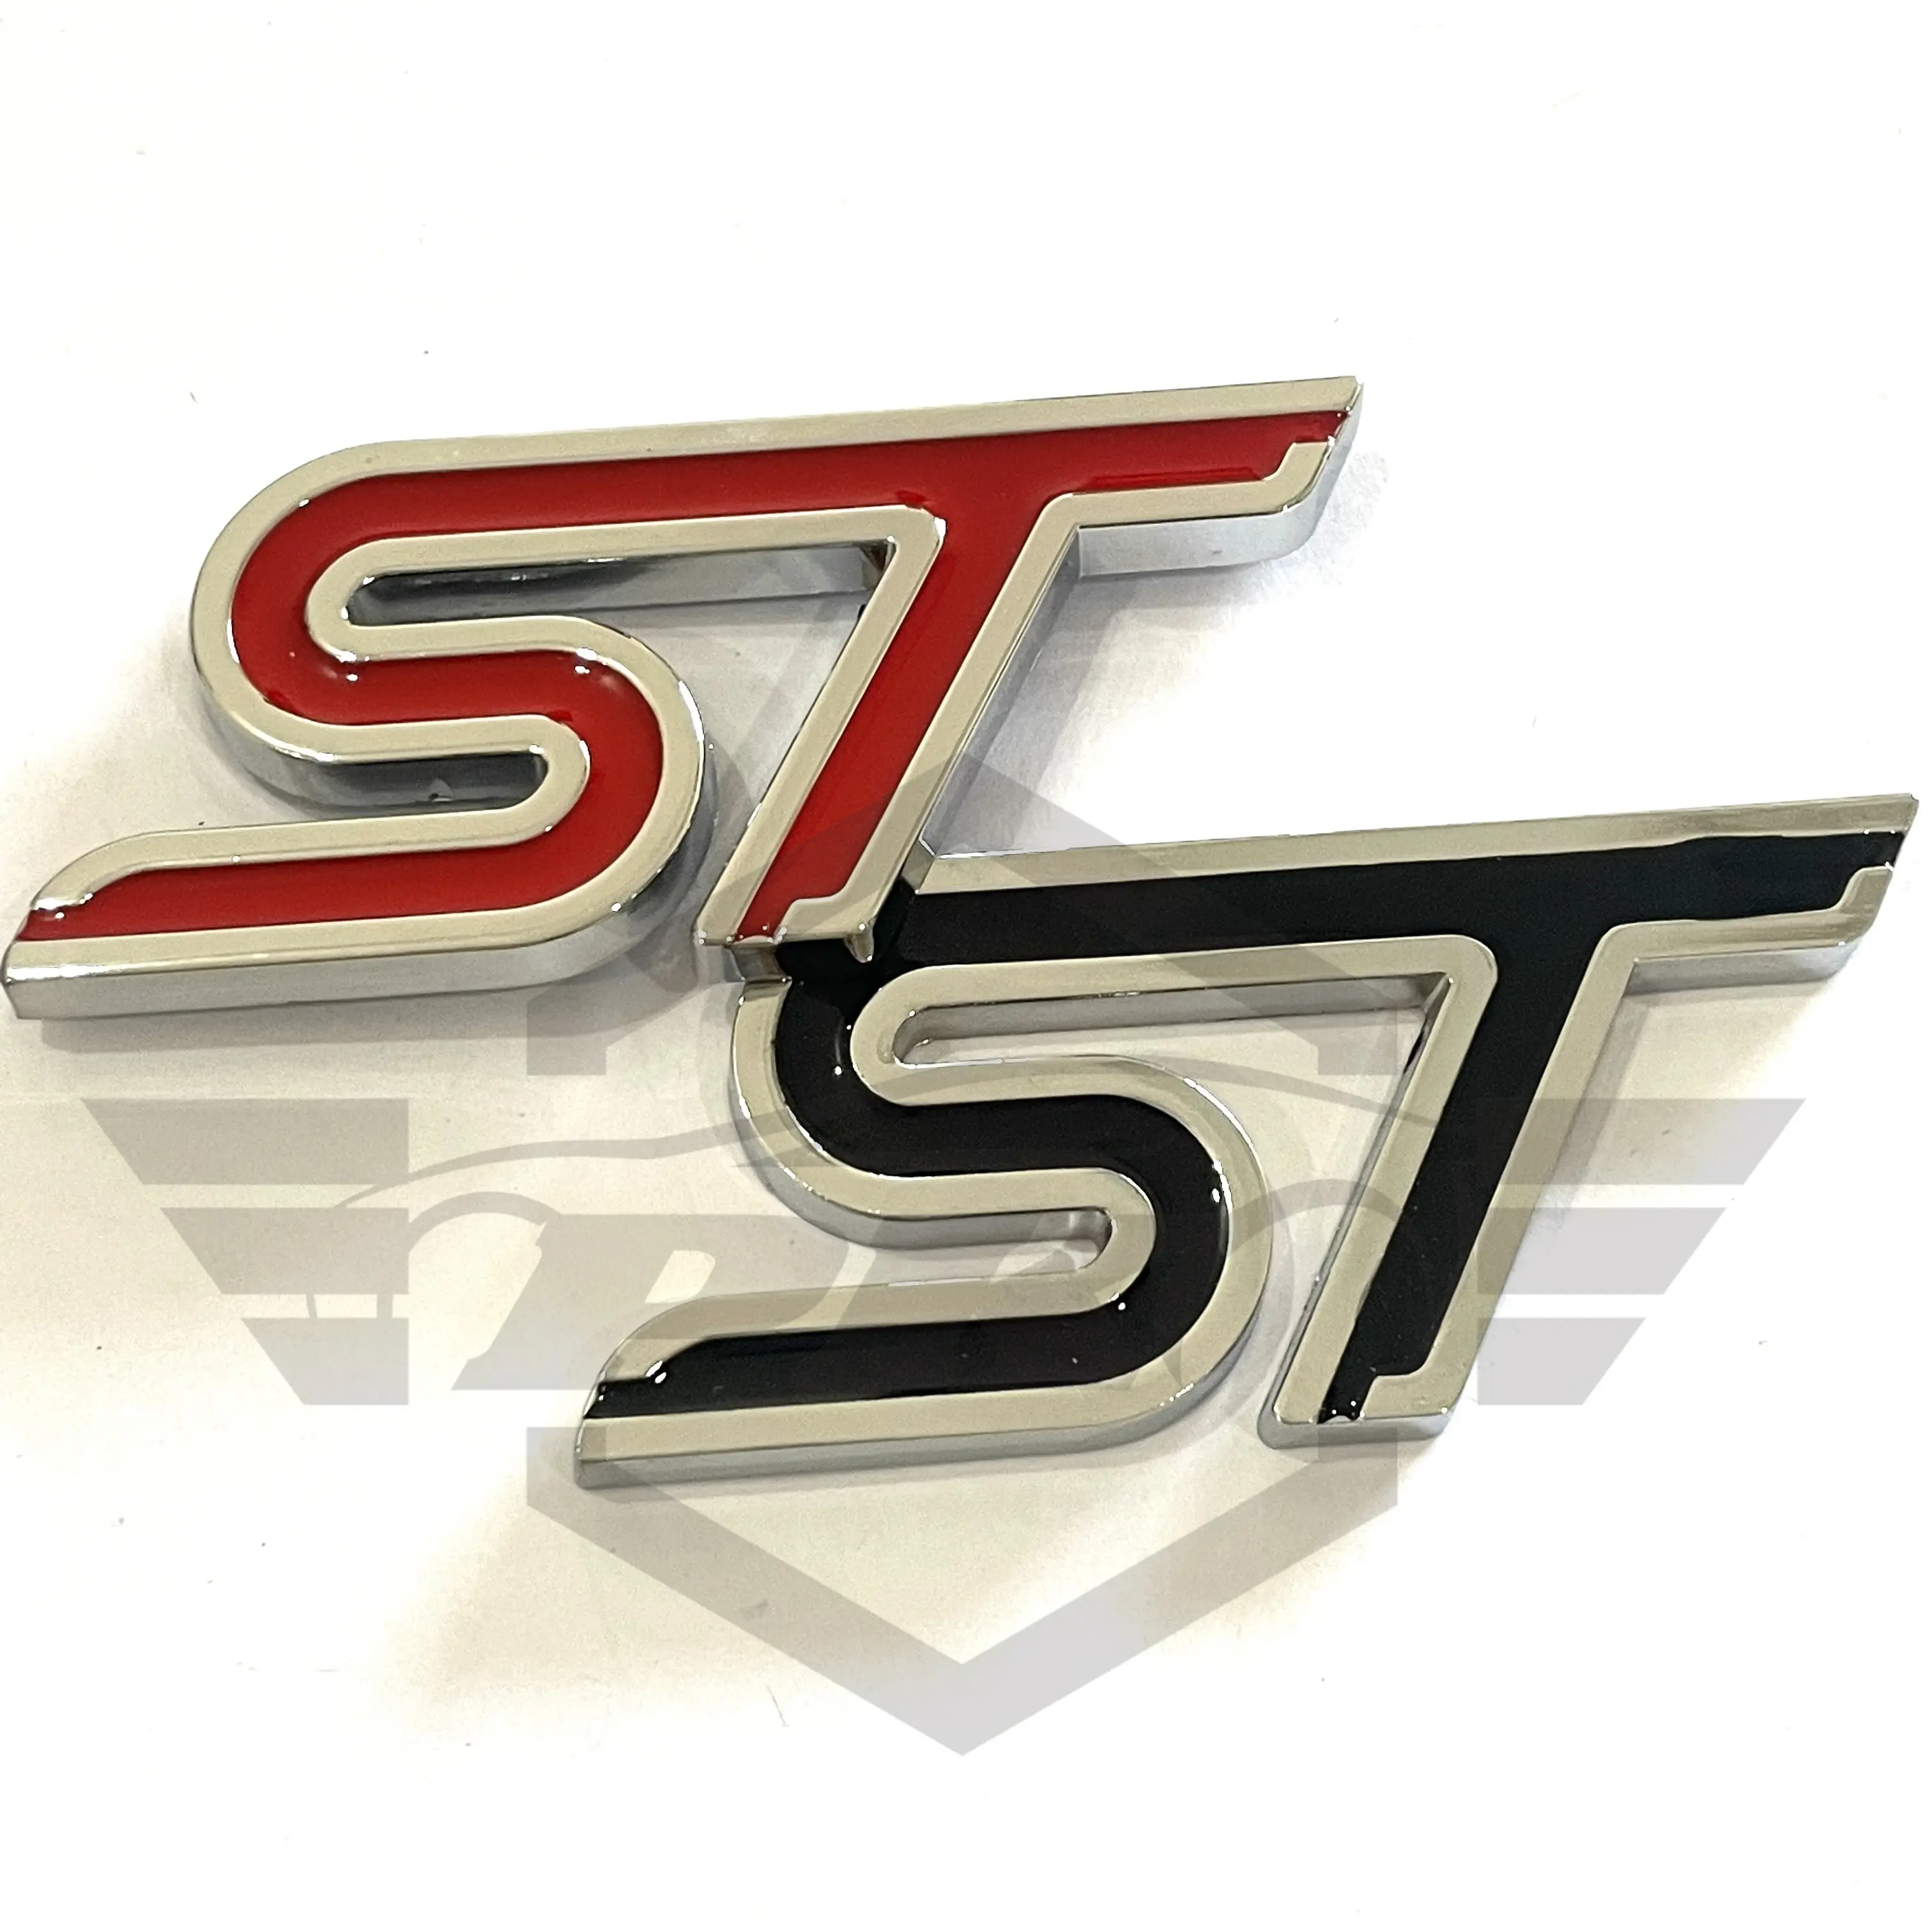 Car 3D Metal Body Rear Trunk ST Styling Emblem Badge Sticker For Ford Focus 1 2 3 4 Mondeo MK2 MK3 MK4 MK5 Mustang